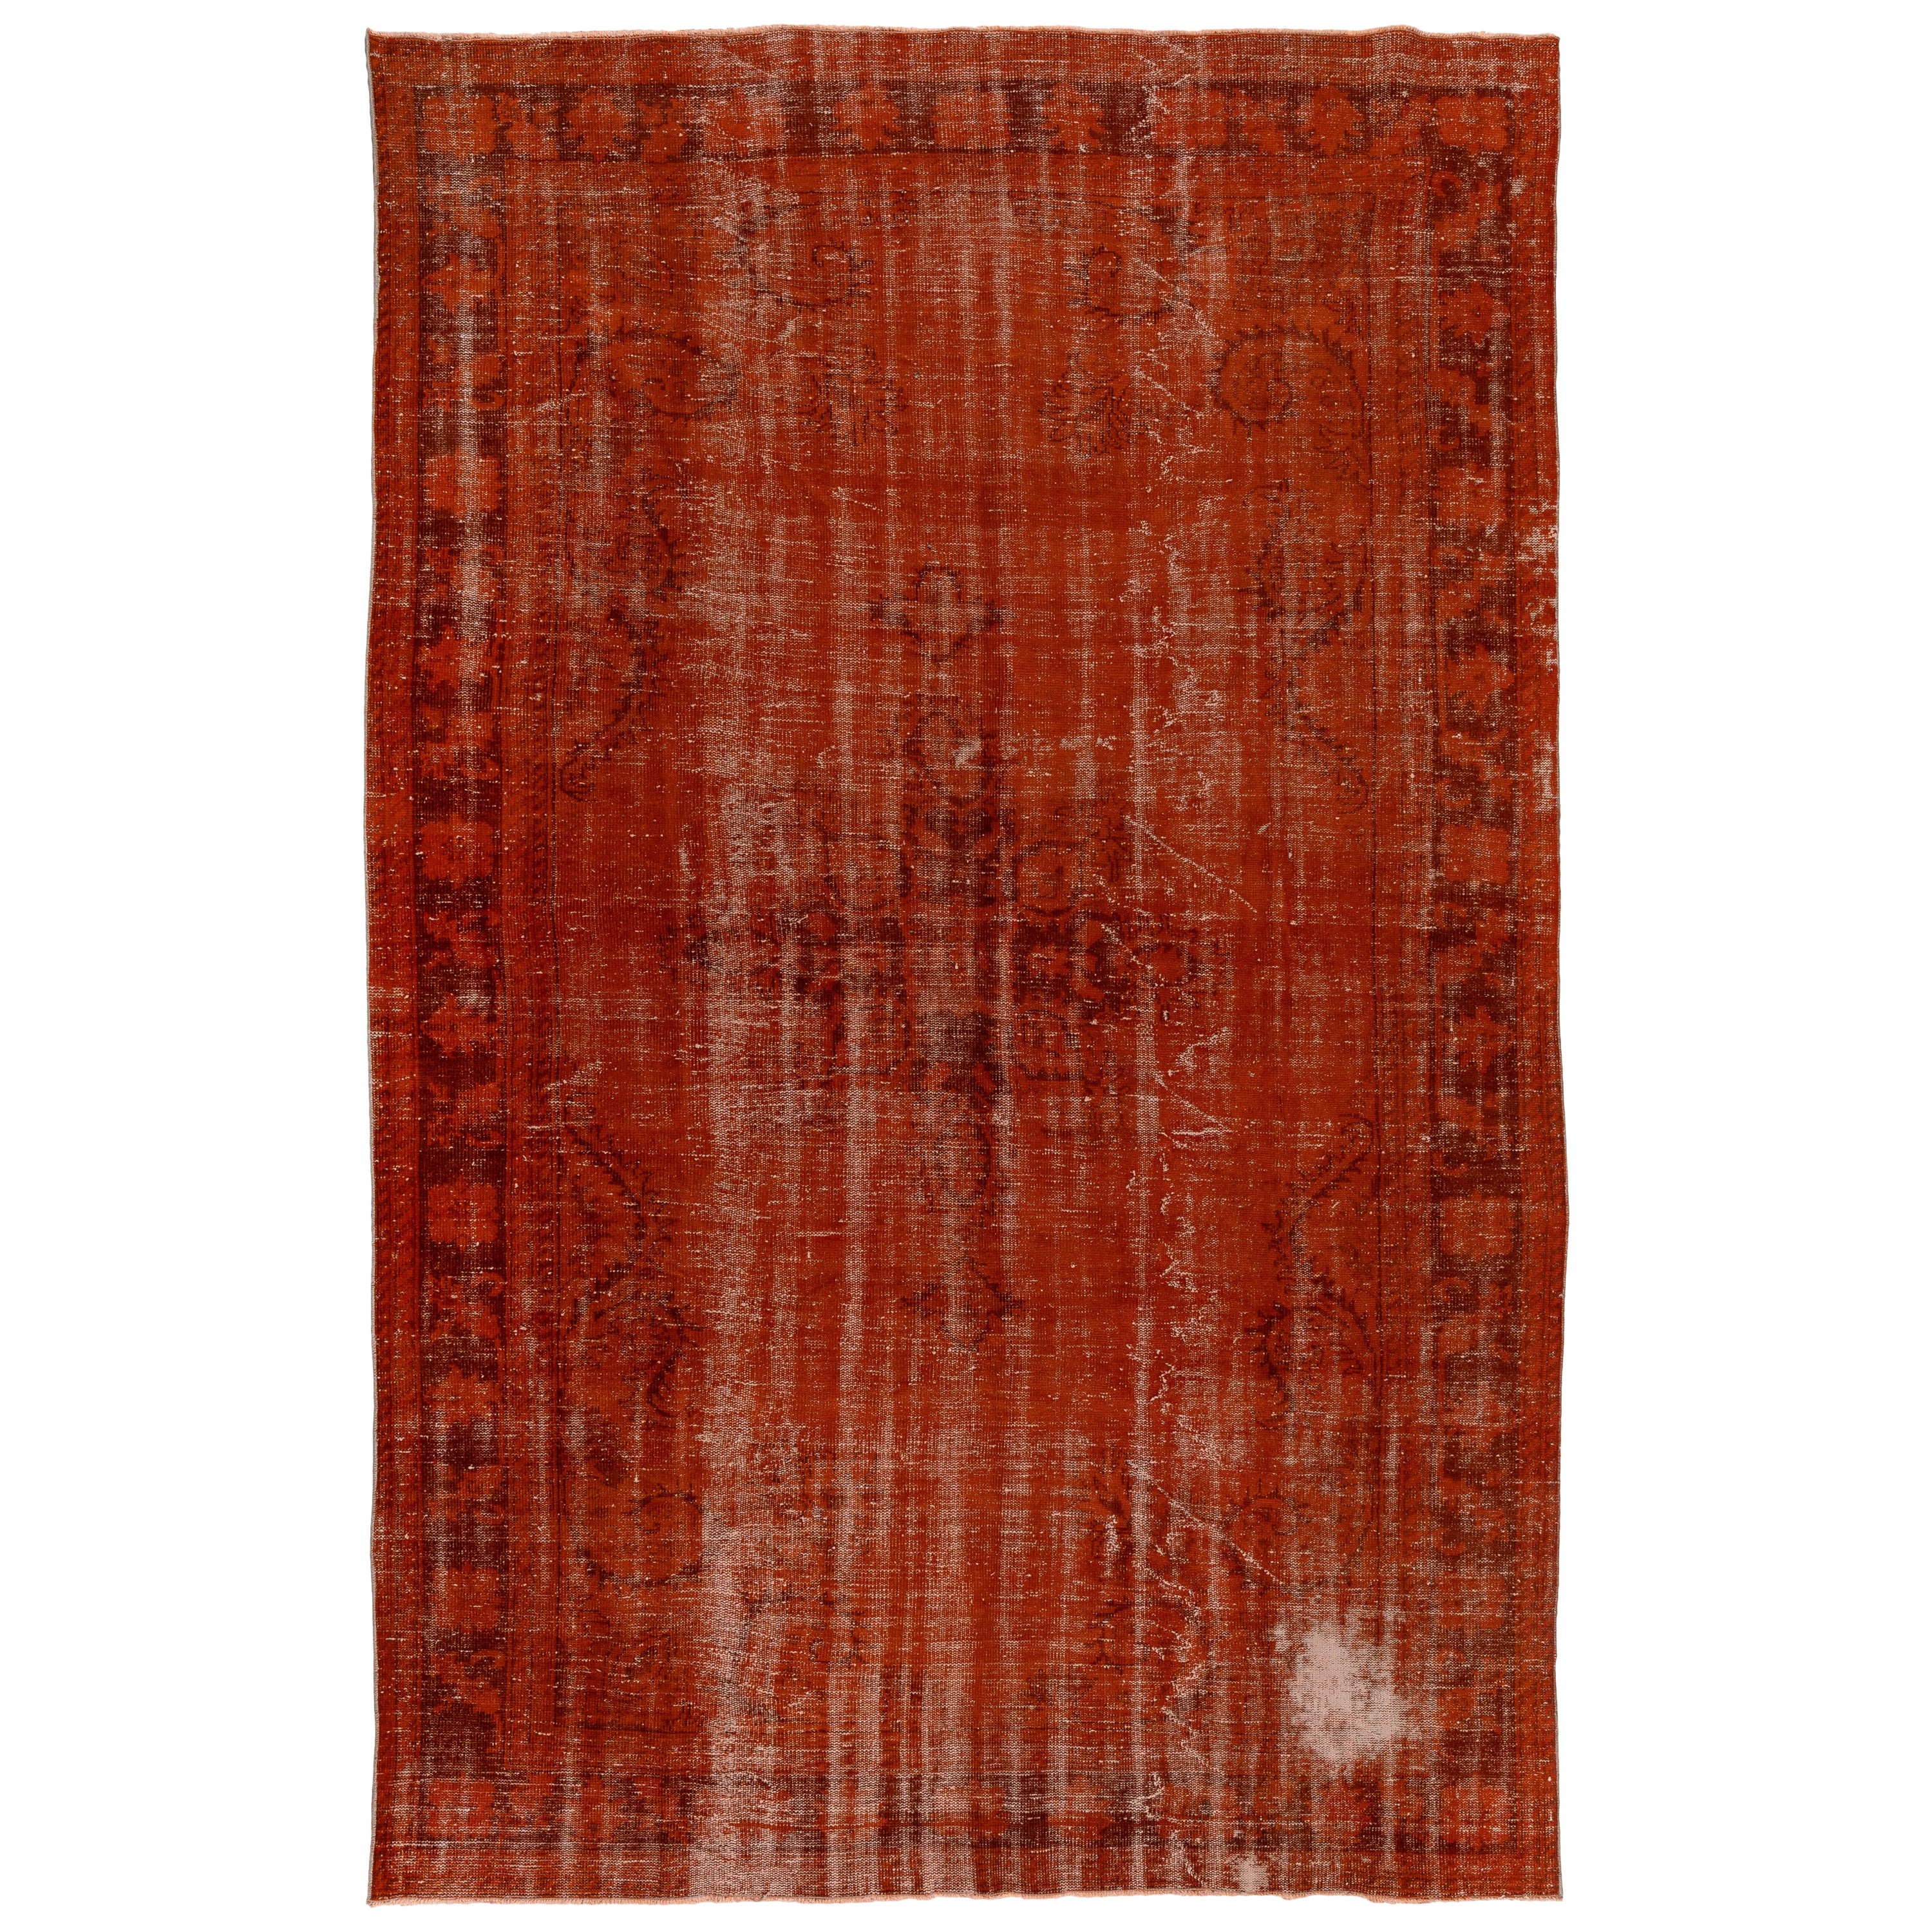 7.6x11.4 Ft Handmade Turkish Area Rug in Orange. Mid-Century Distressed Carpet